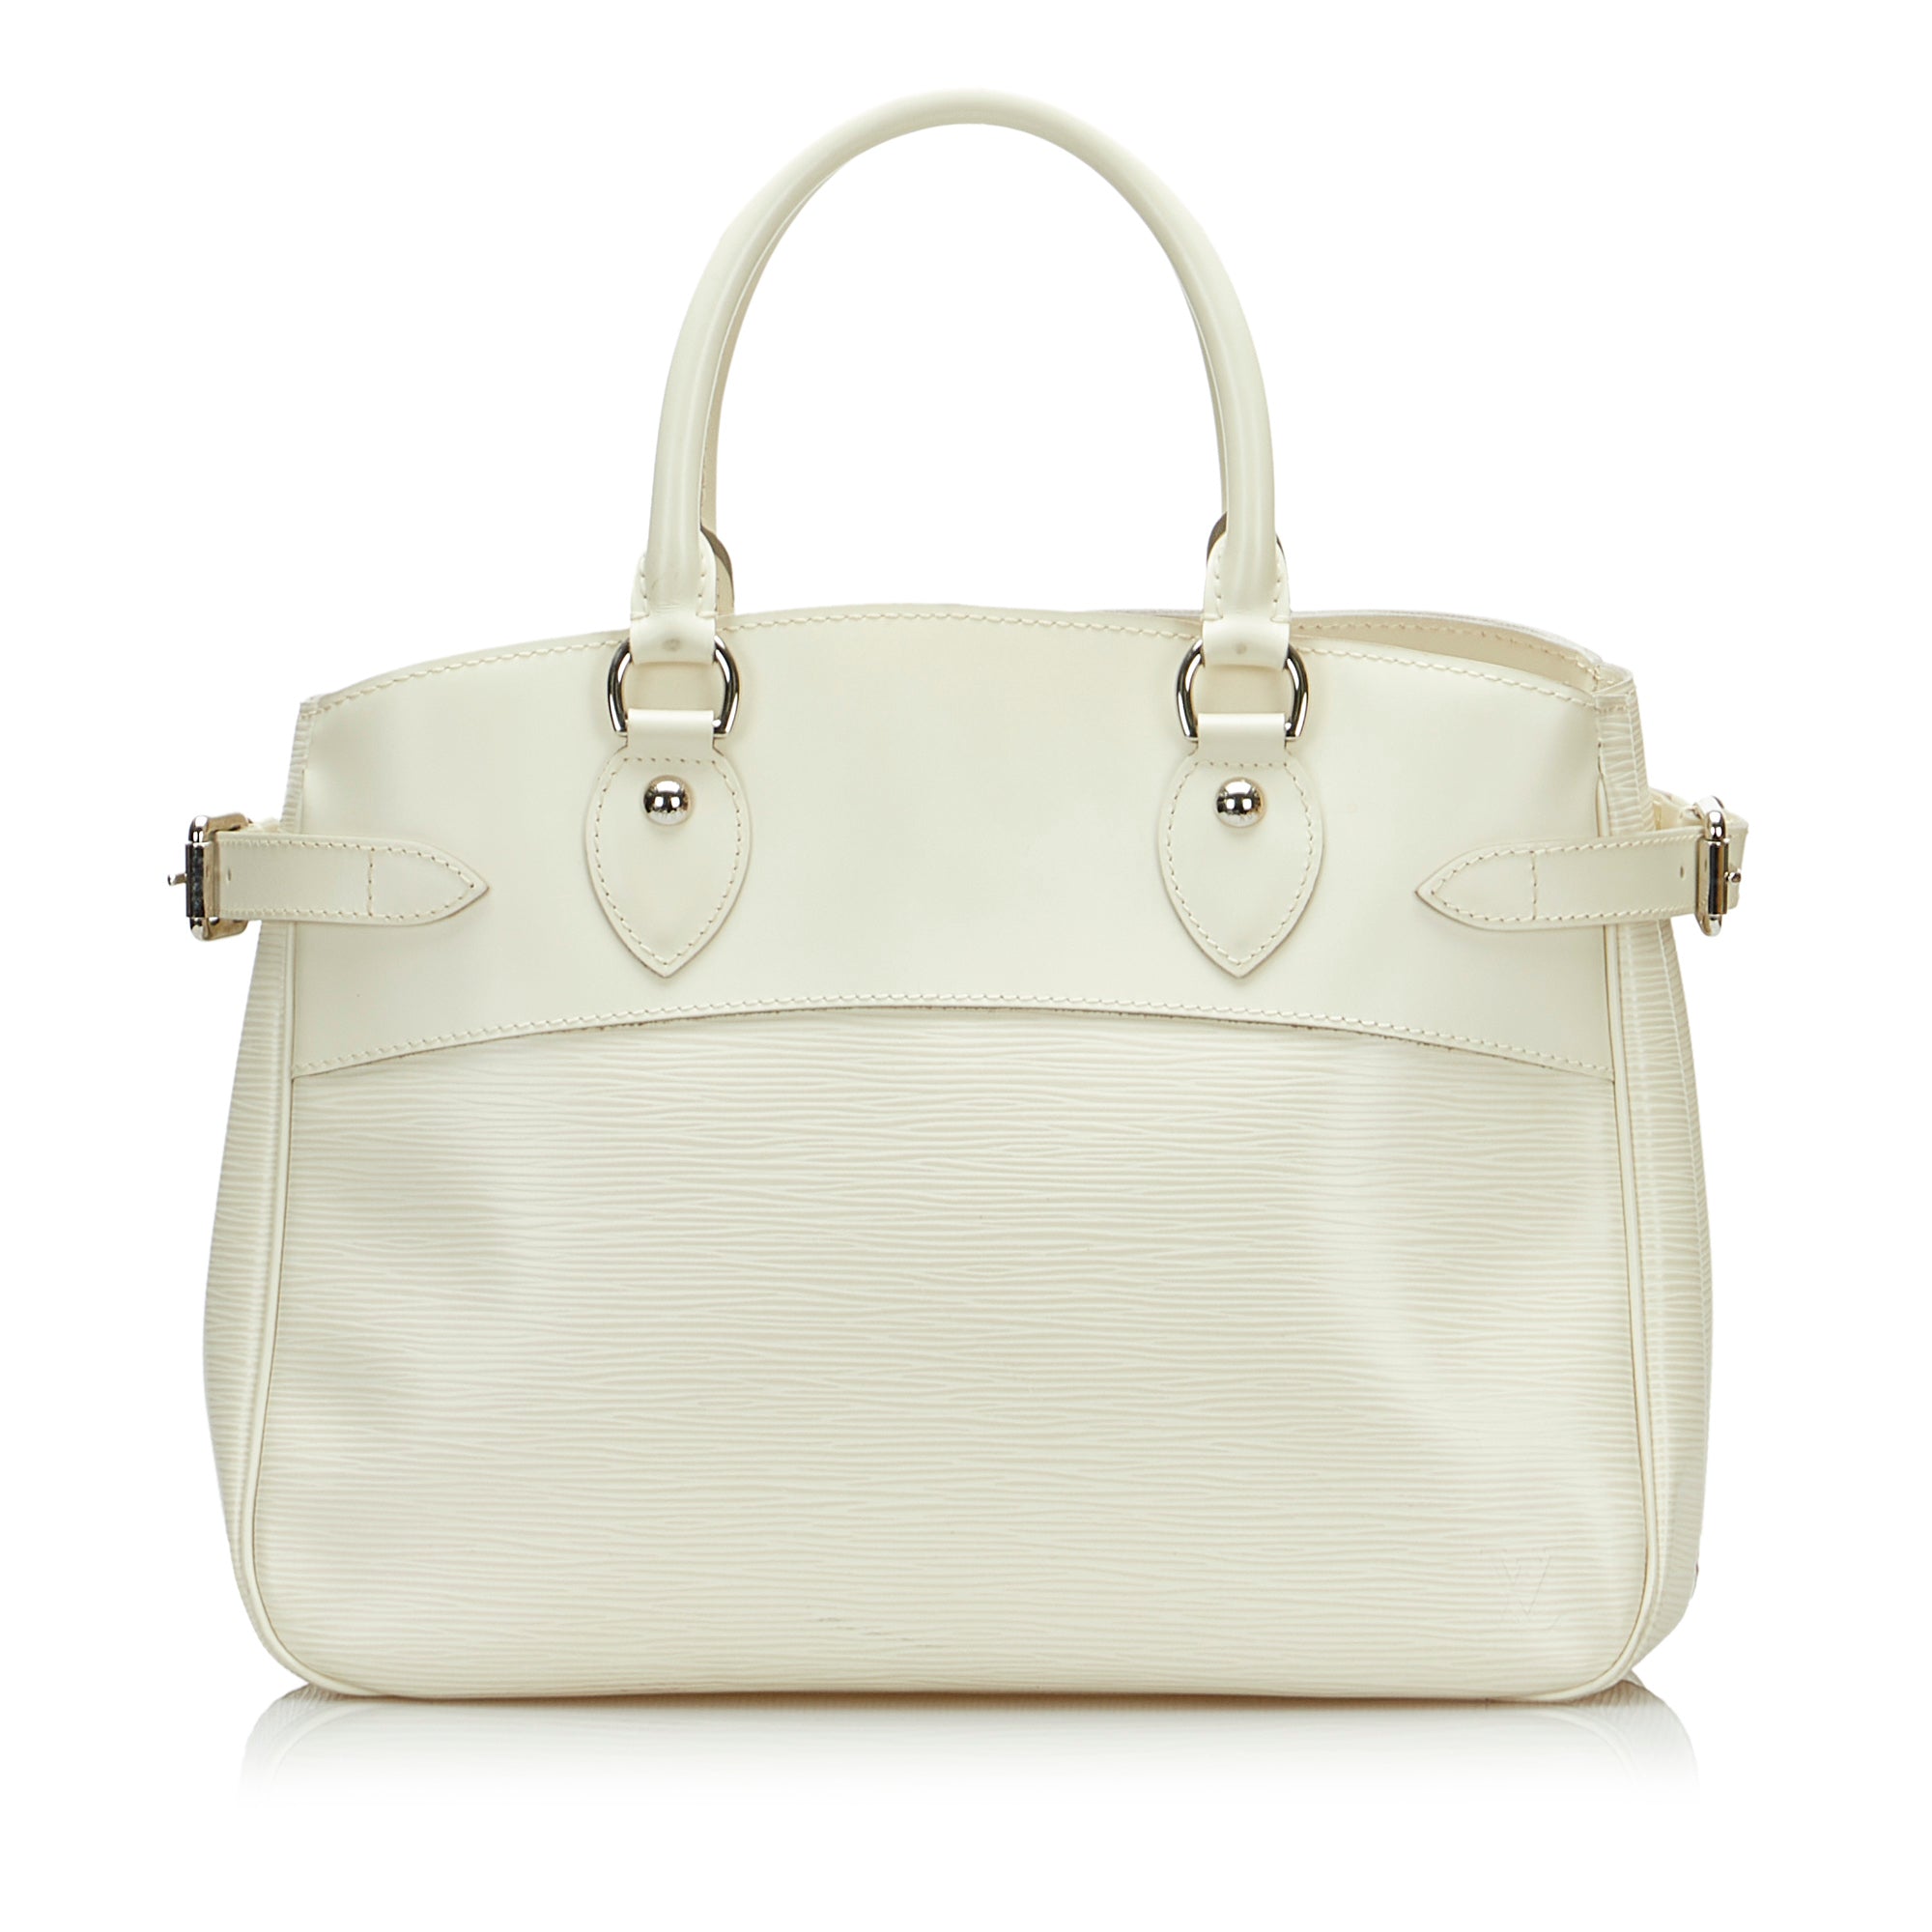 Louis Vuitton Monogram Cerises Keepall Bag worn by Bella Hadid New